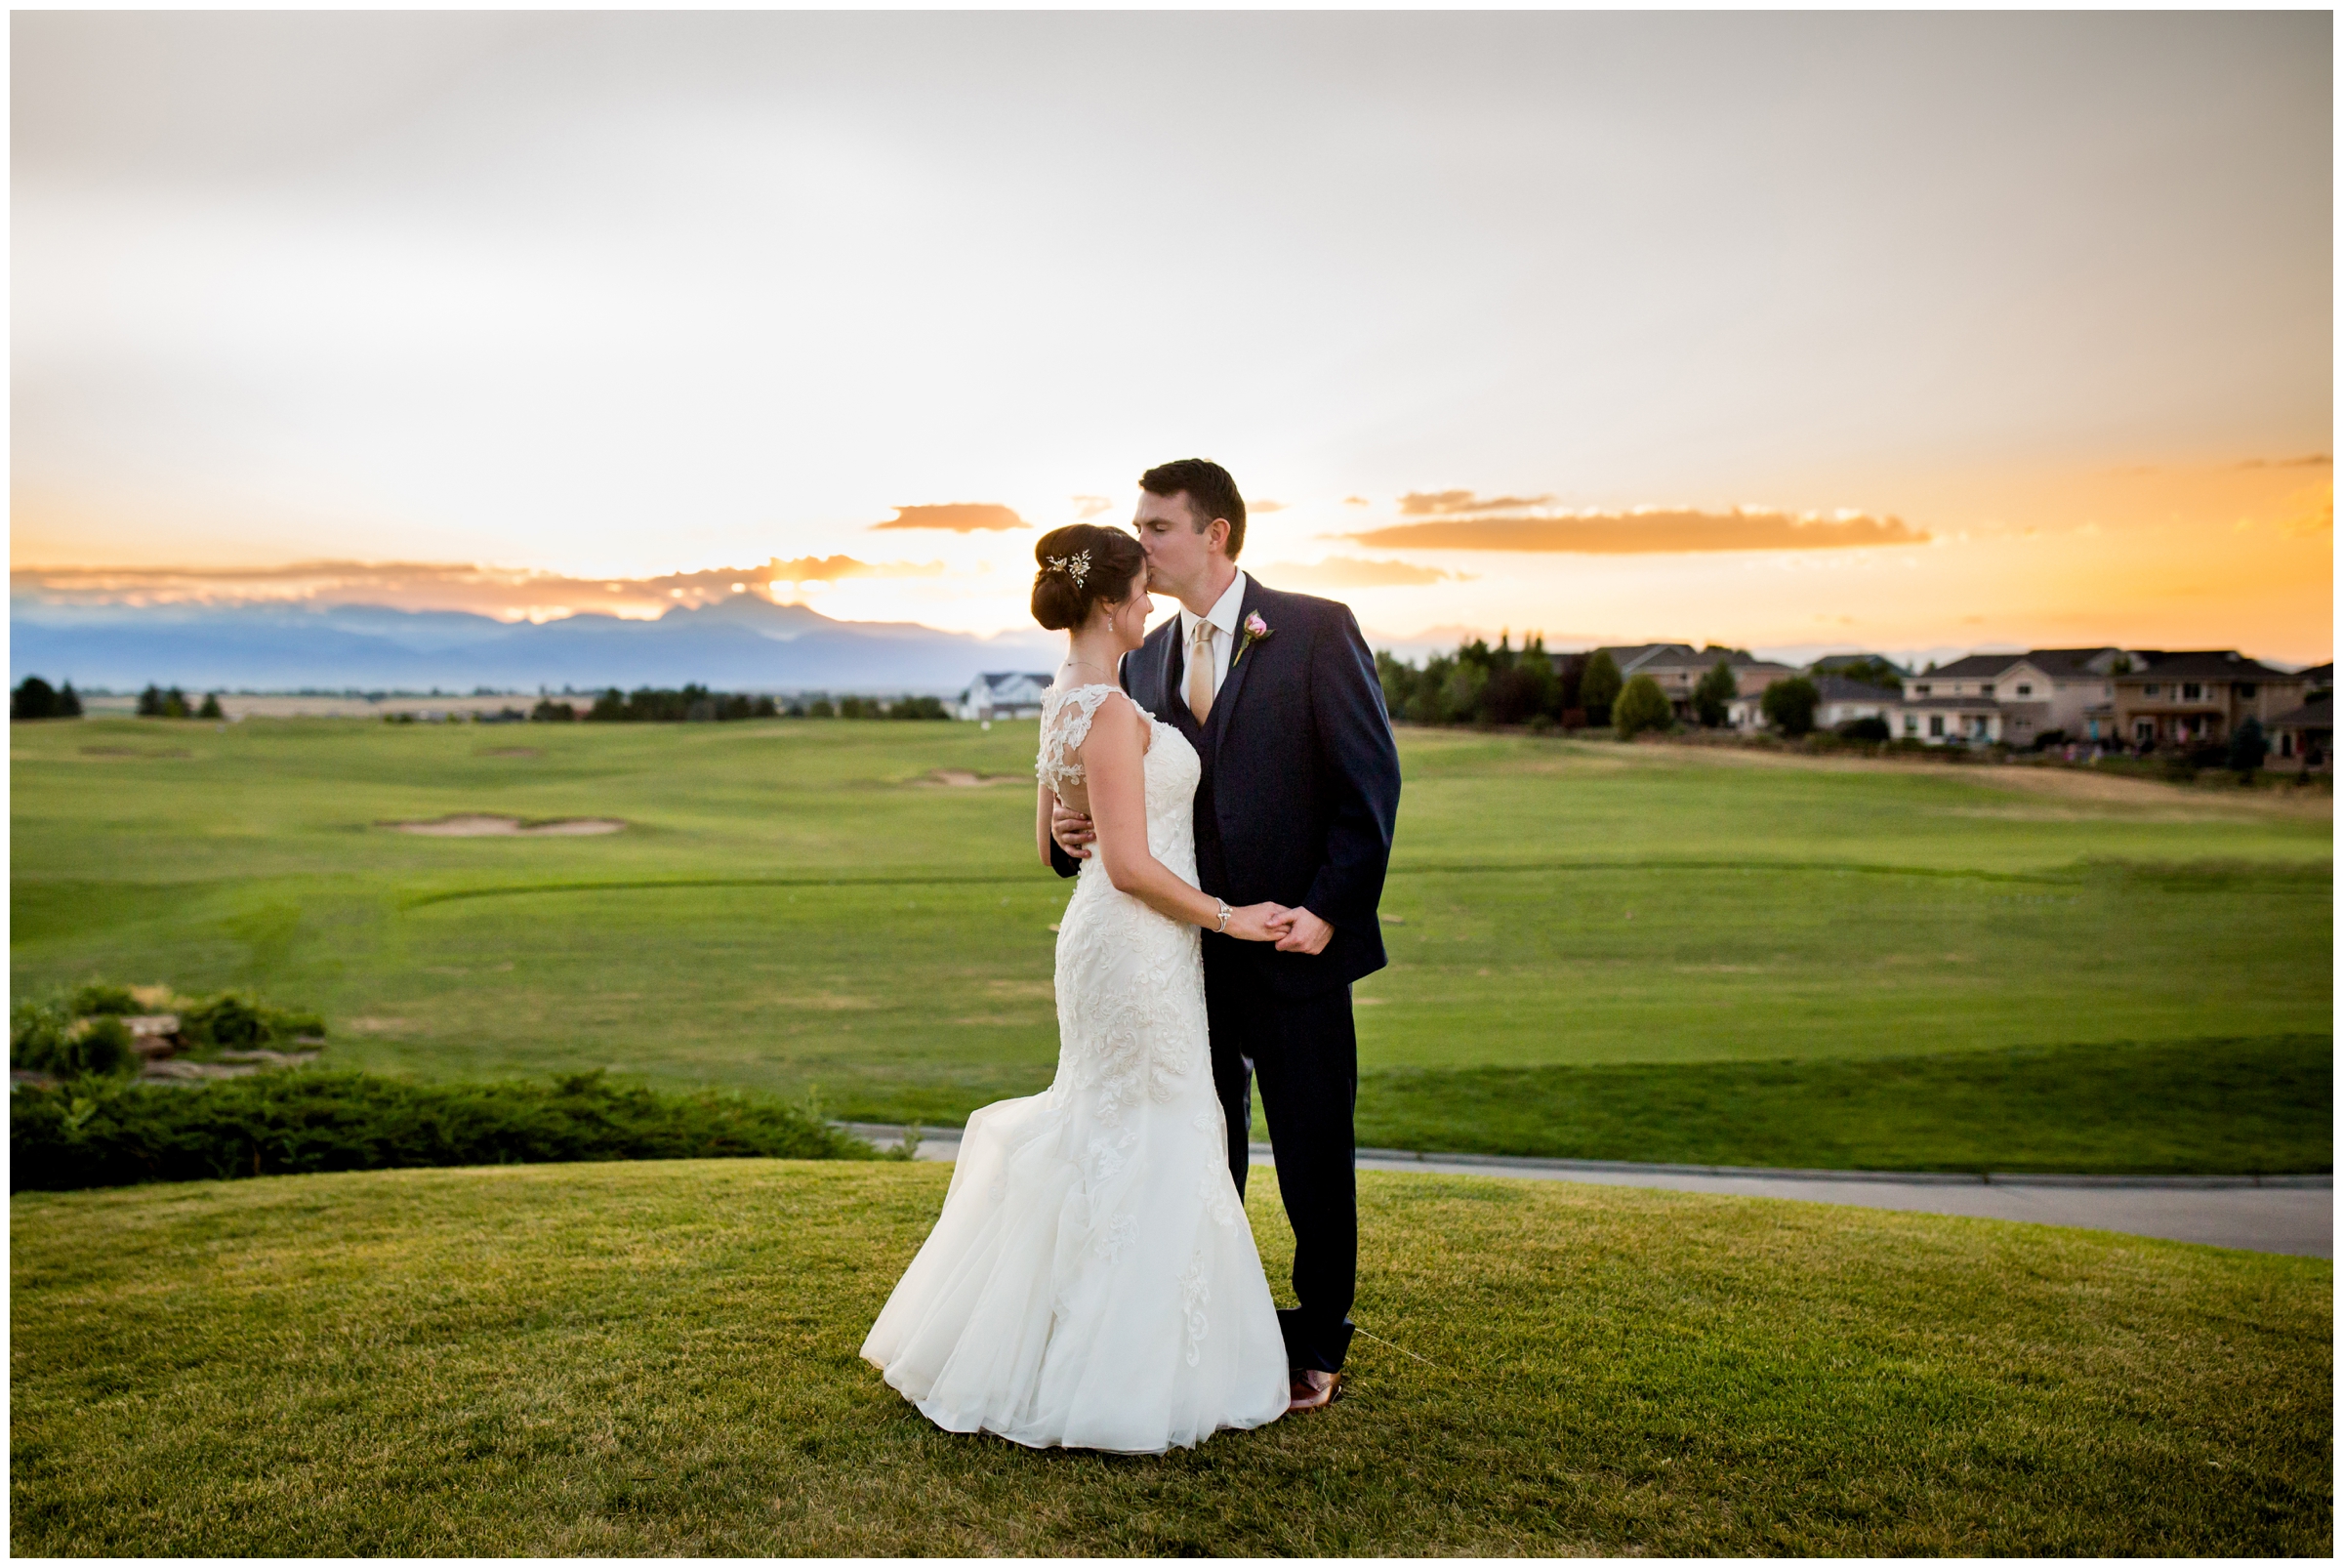 Boulder Colorado sunset wedding photography at Colorado National Golf Club